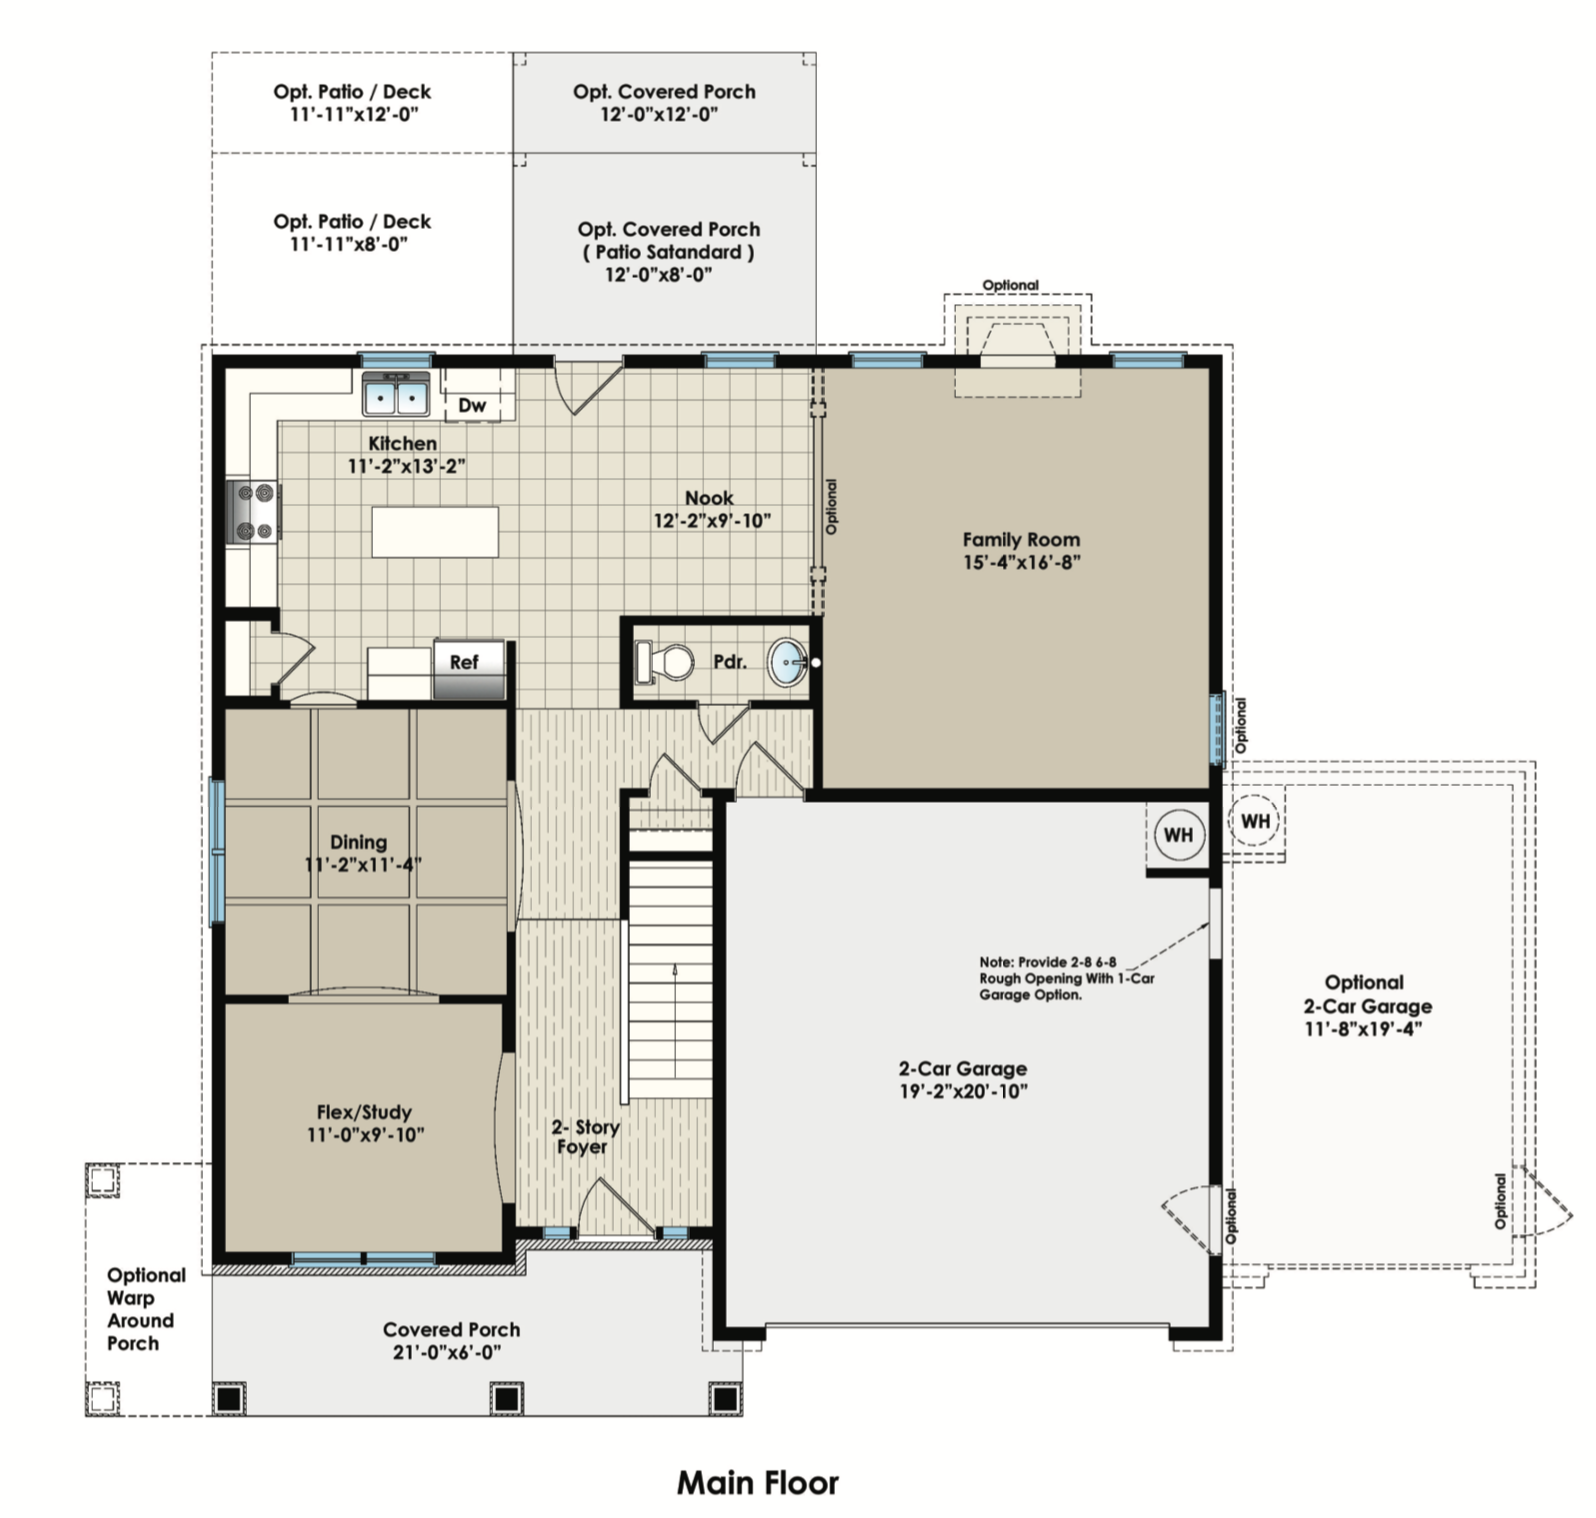 The Hatteras floor plan image